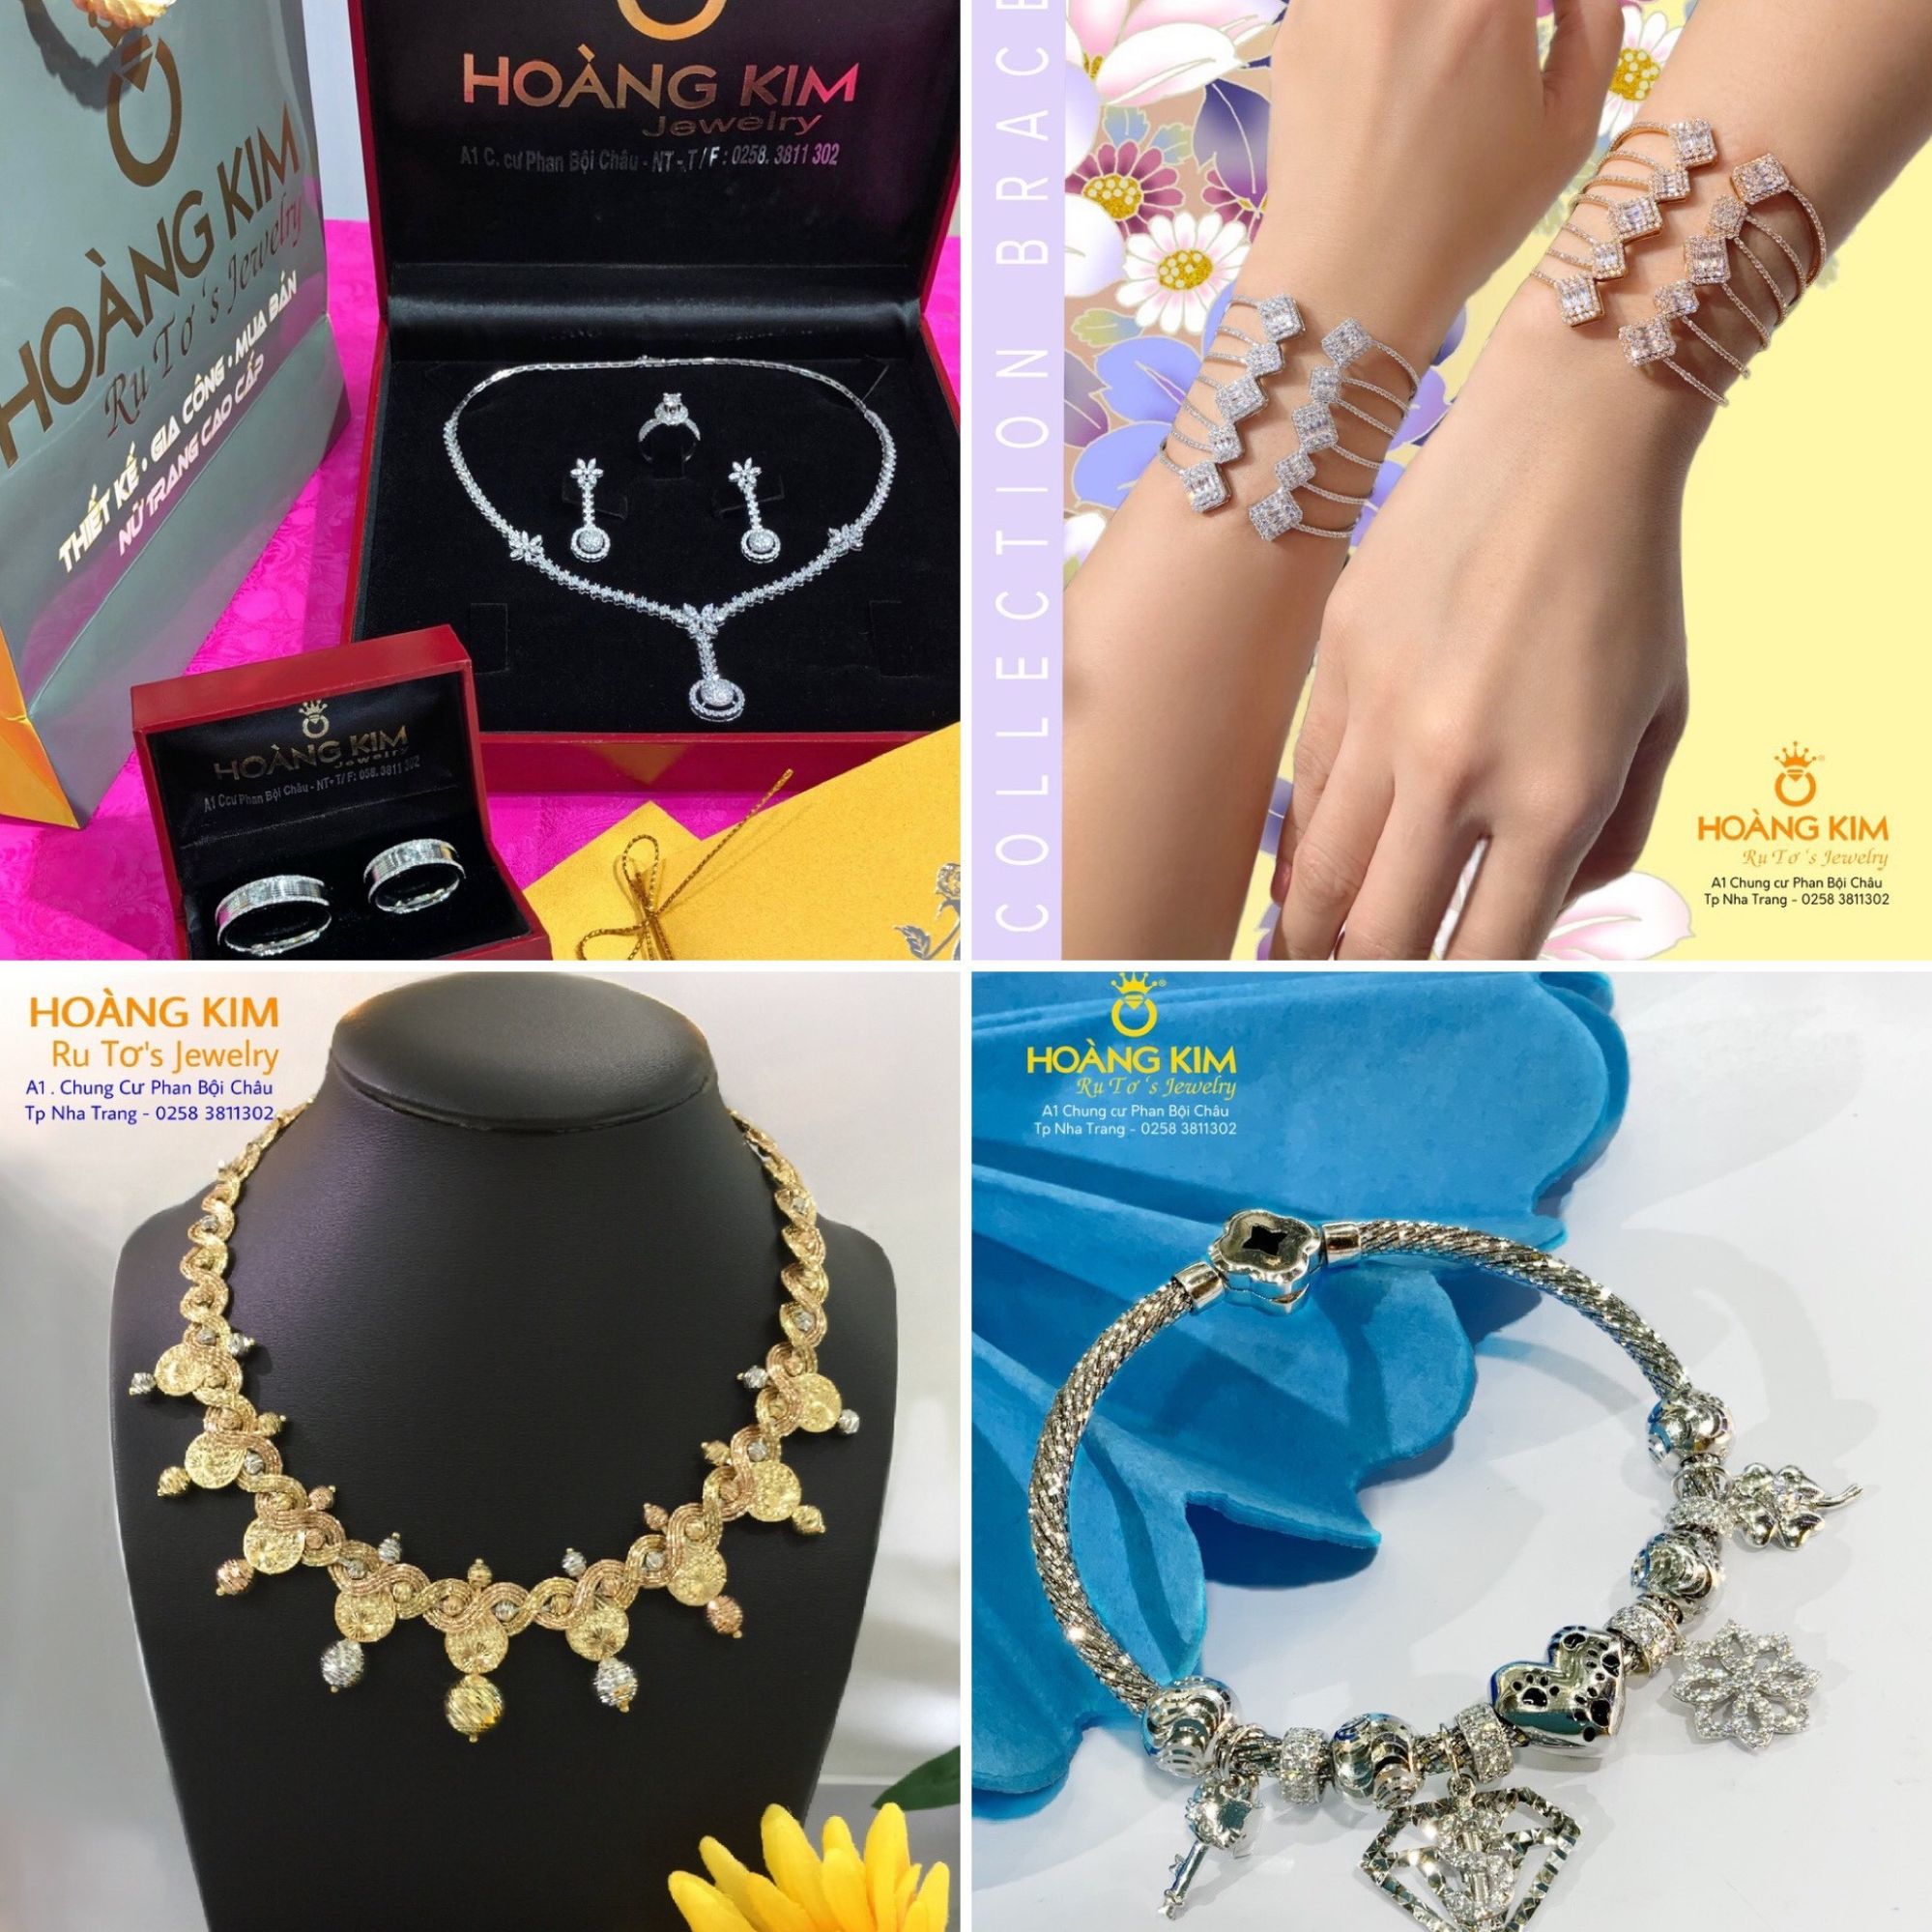 HOÀNG KIM RUTO' S Jewelry & Diamond